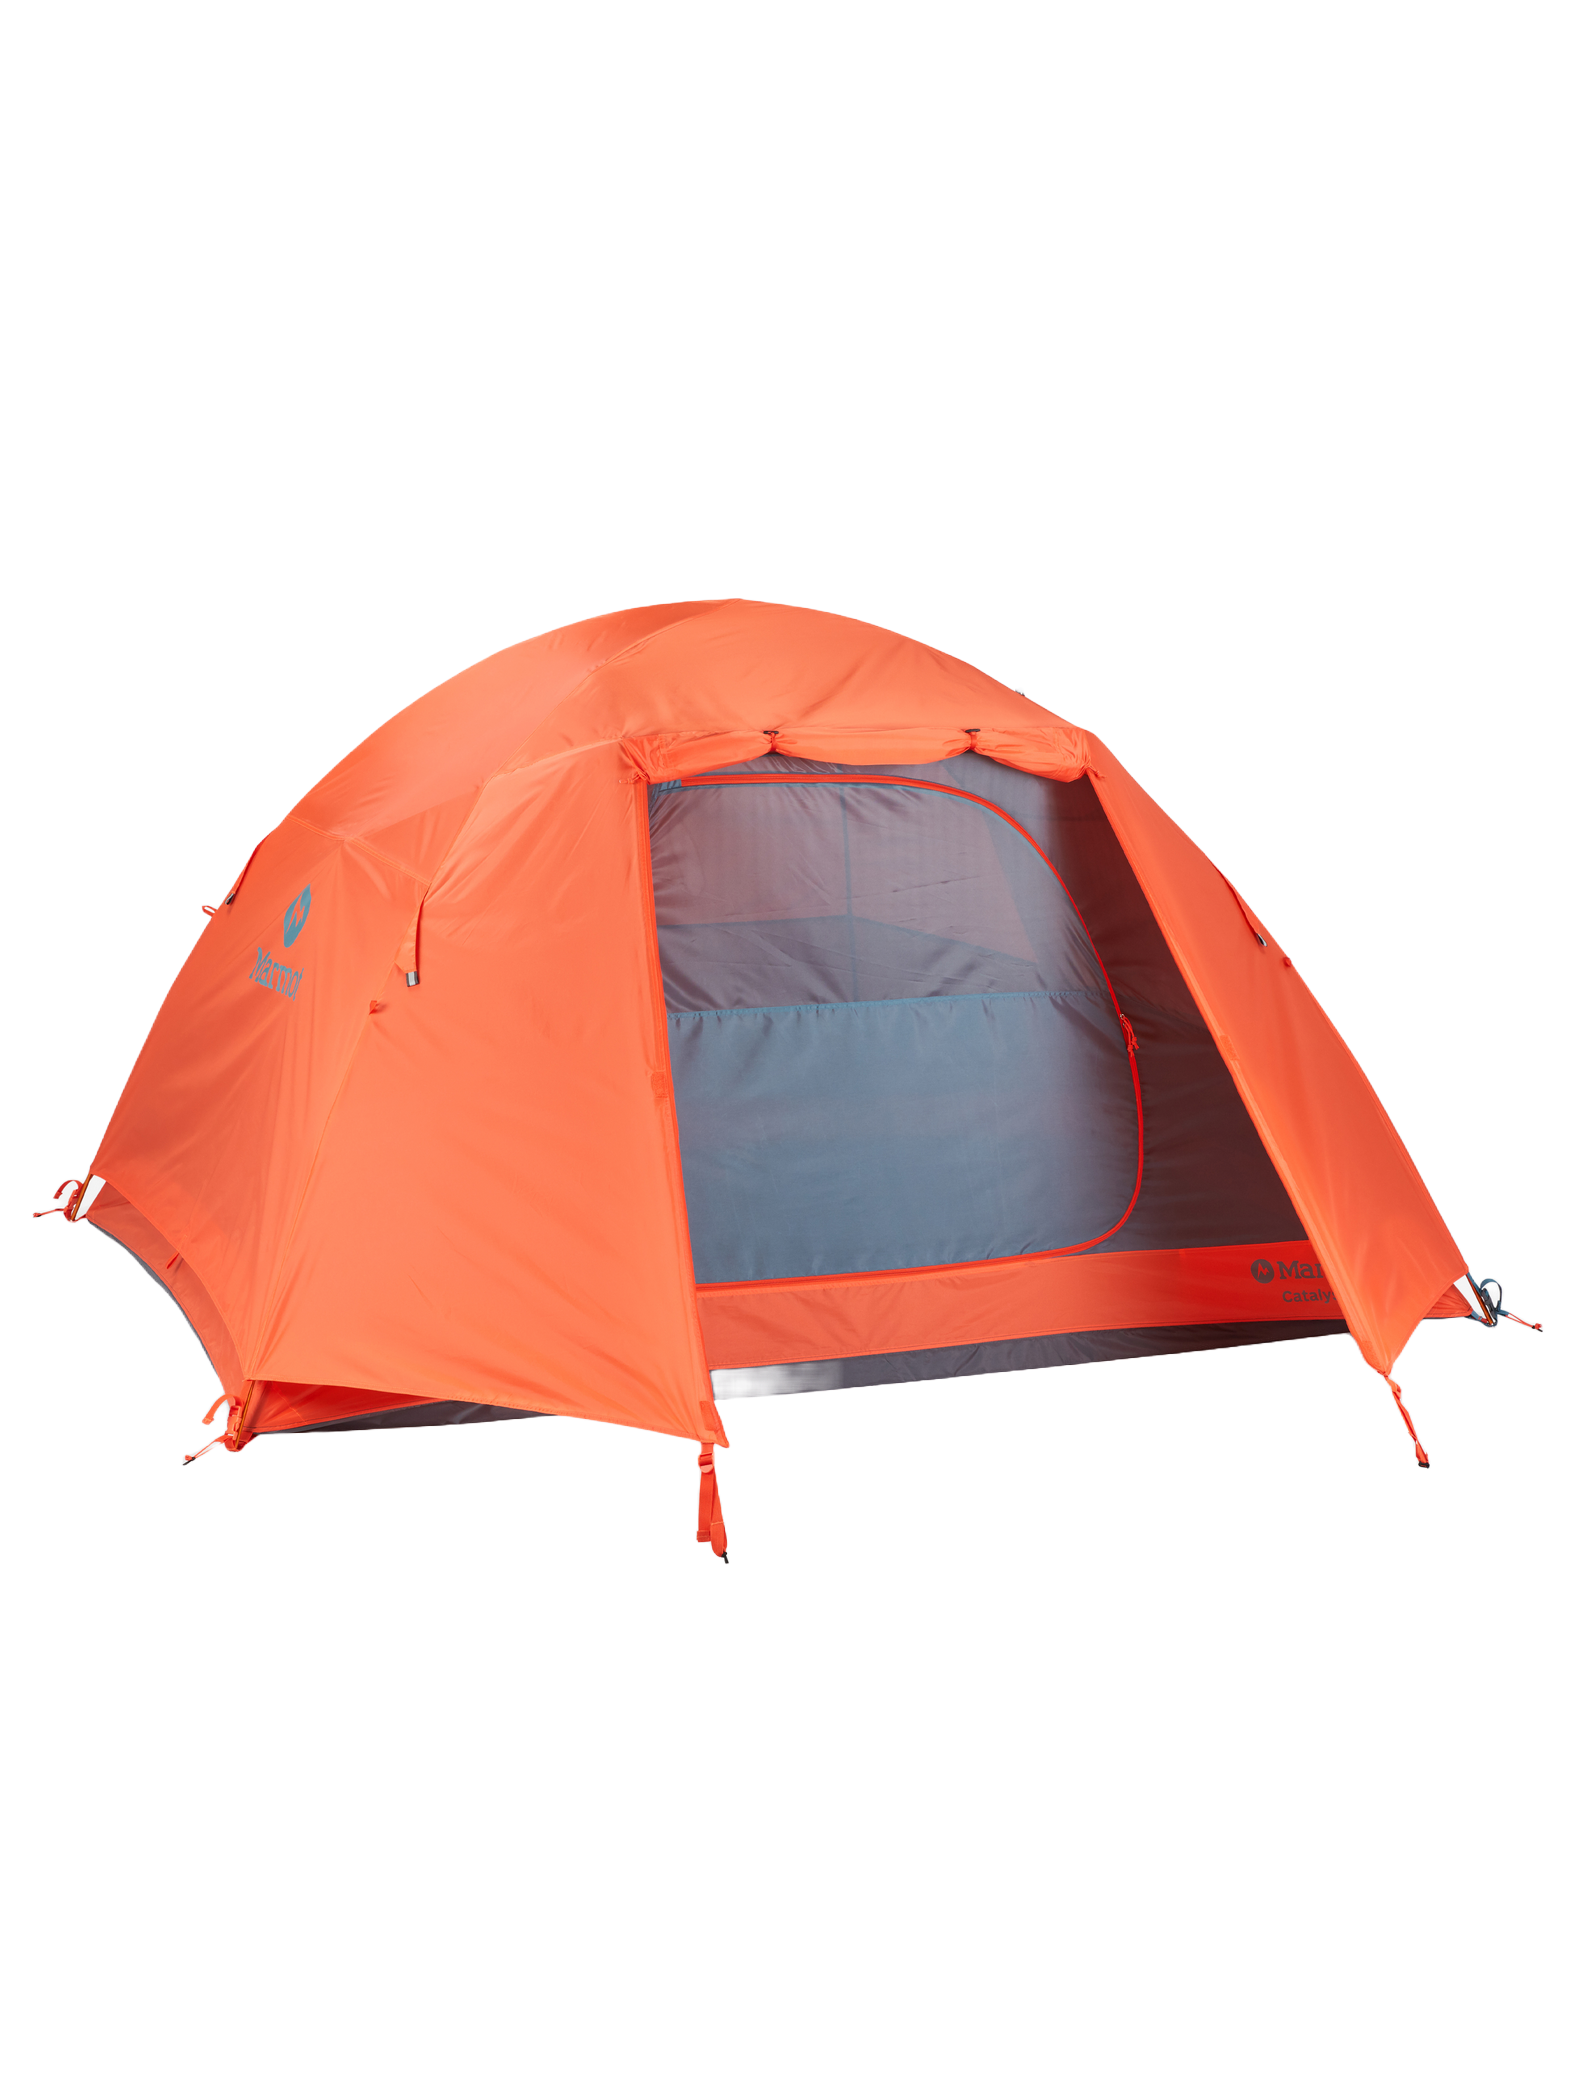 Marmot Catalyst Tent - 3 Person